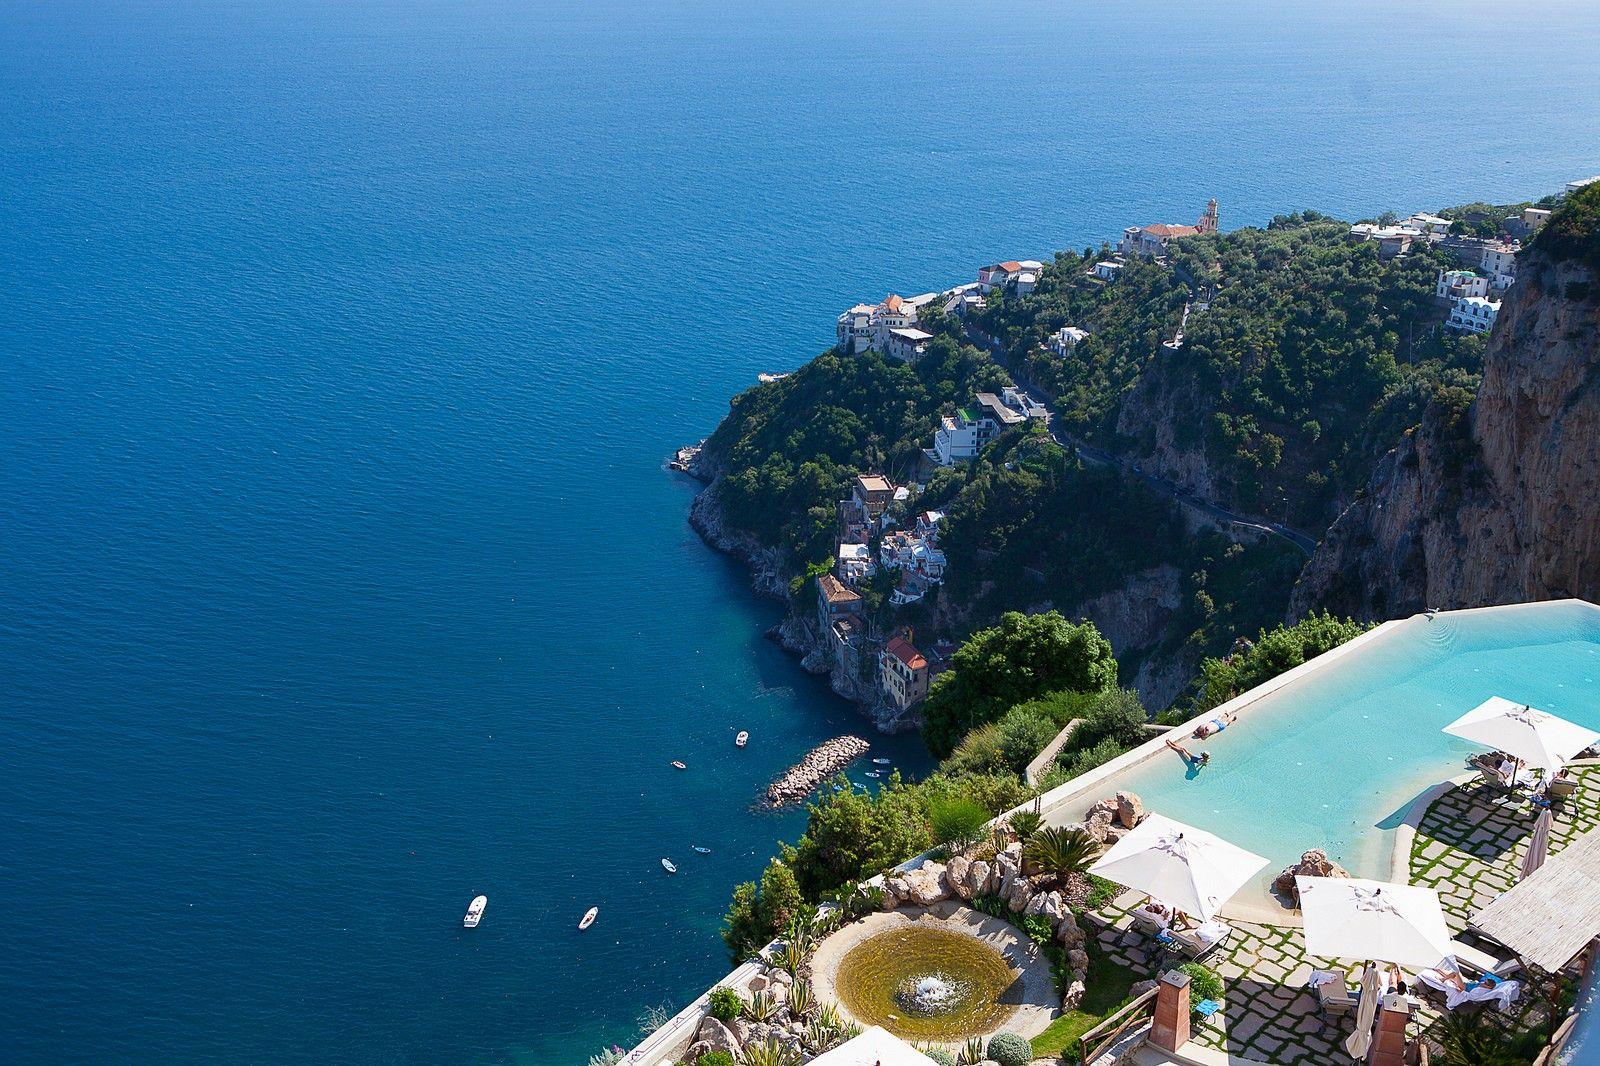 Amalfi Tag wallpaper: Capri Island Amalfi Italy Bluedream Picture